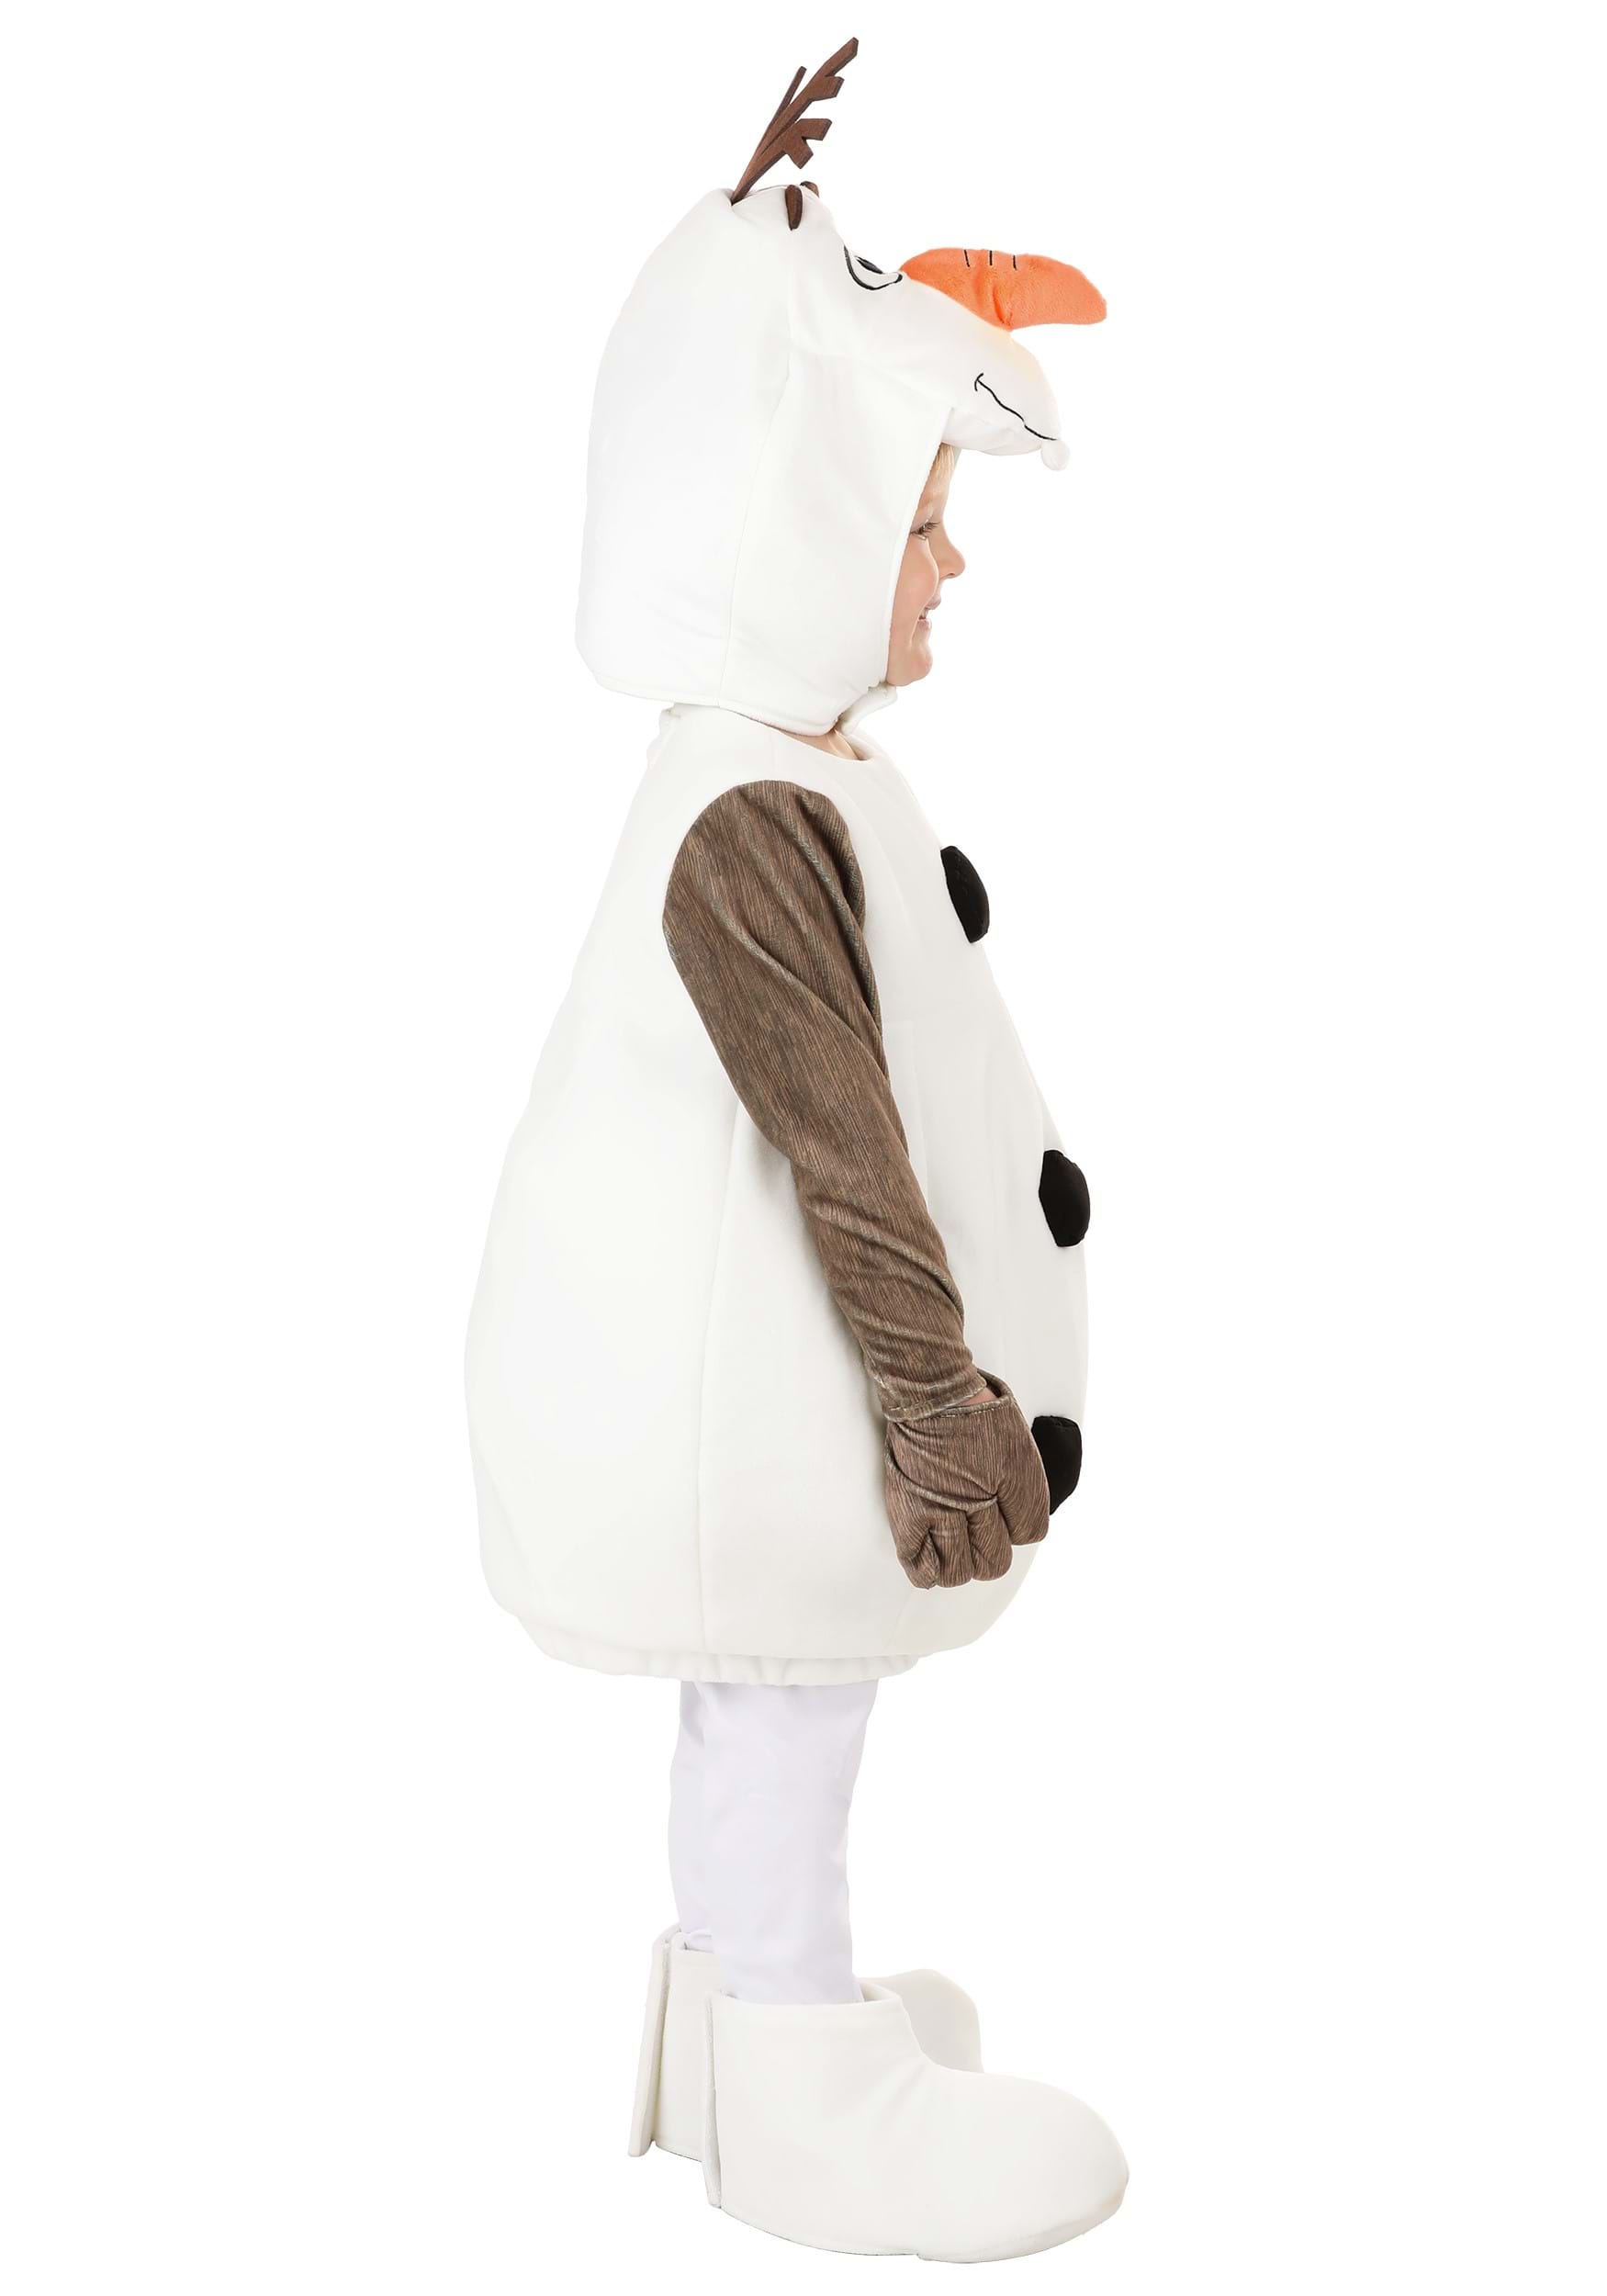 21 OLAF COSTUME ideas  olaf costume, olaf, frozen costume